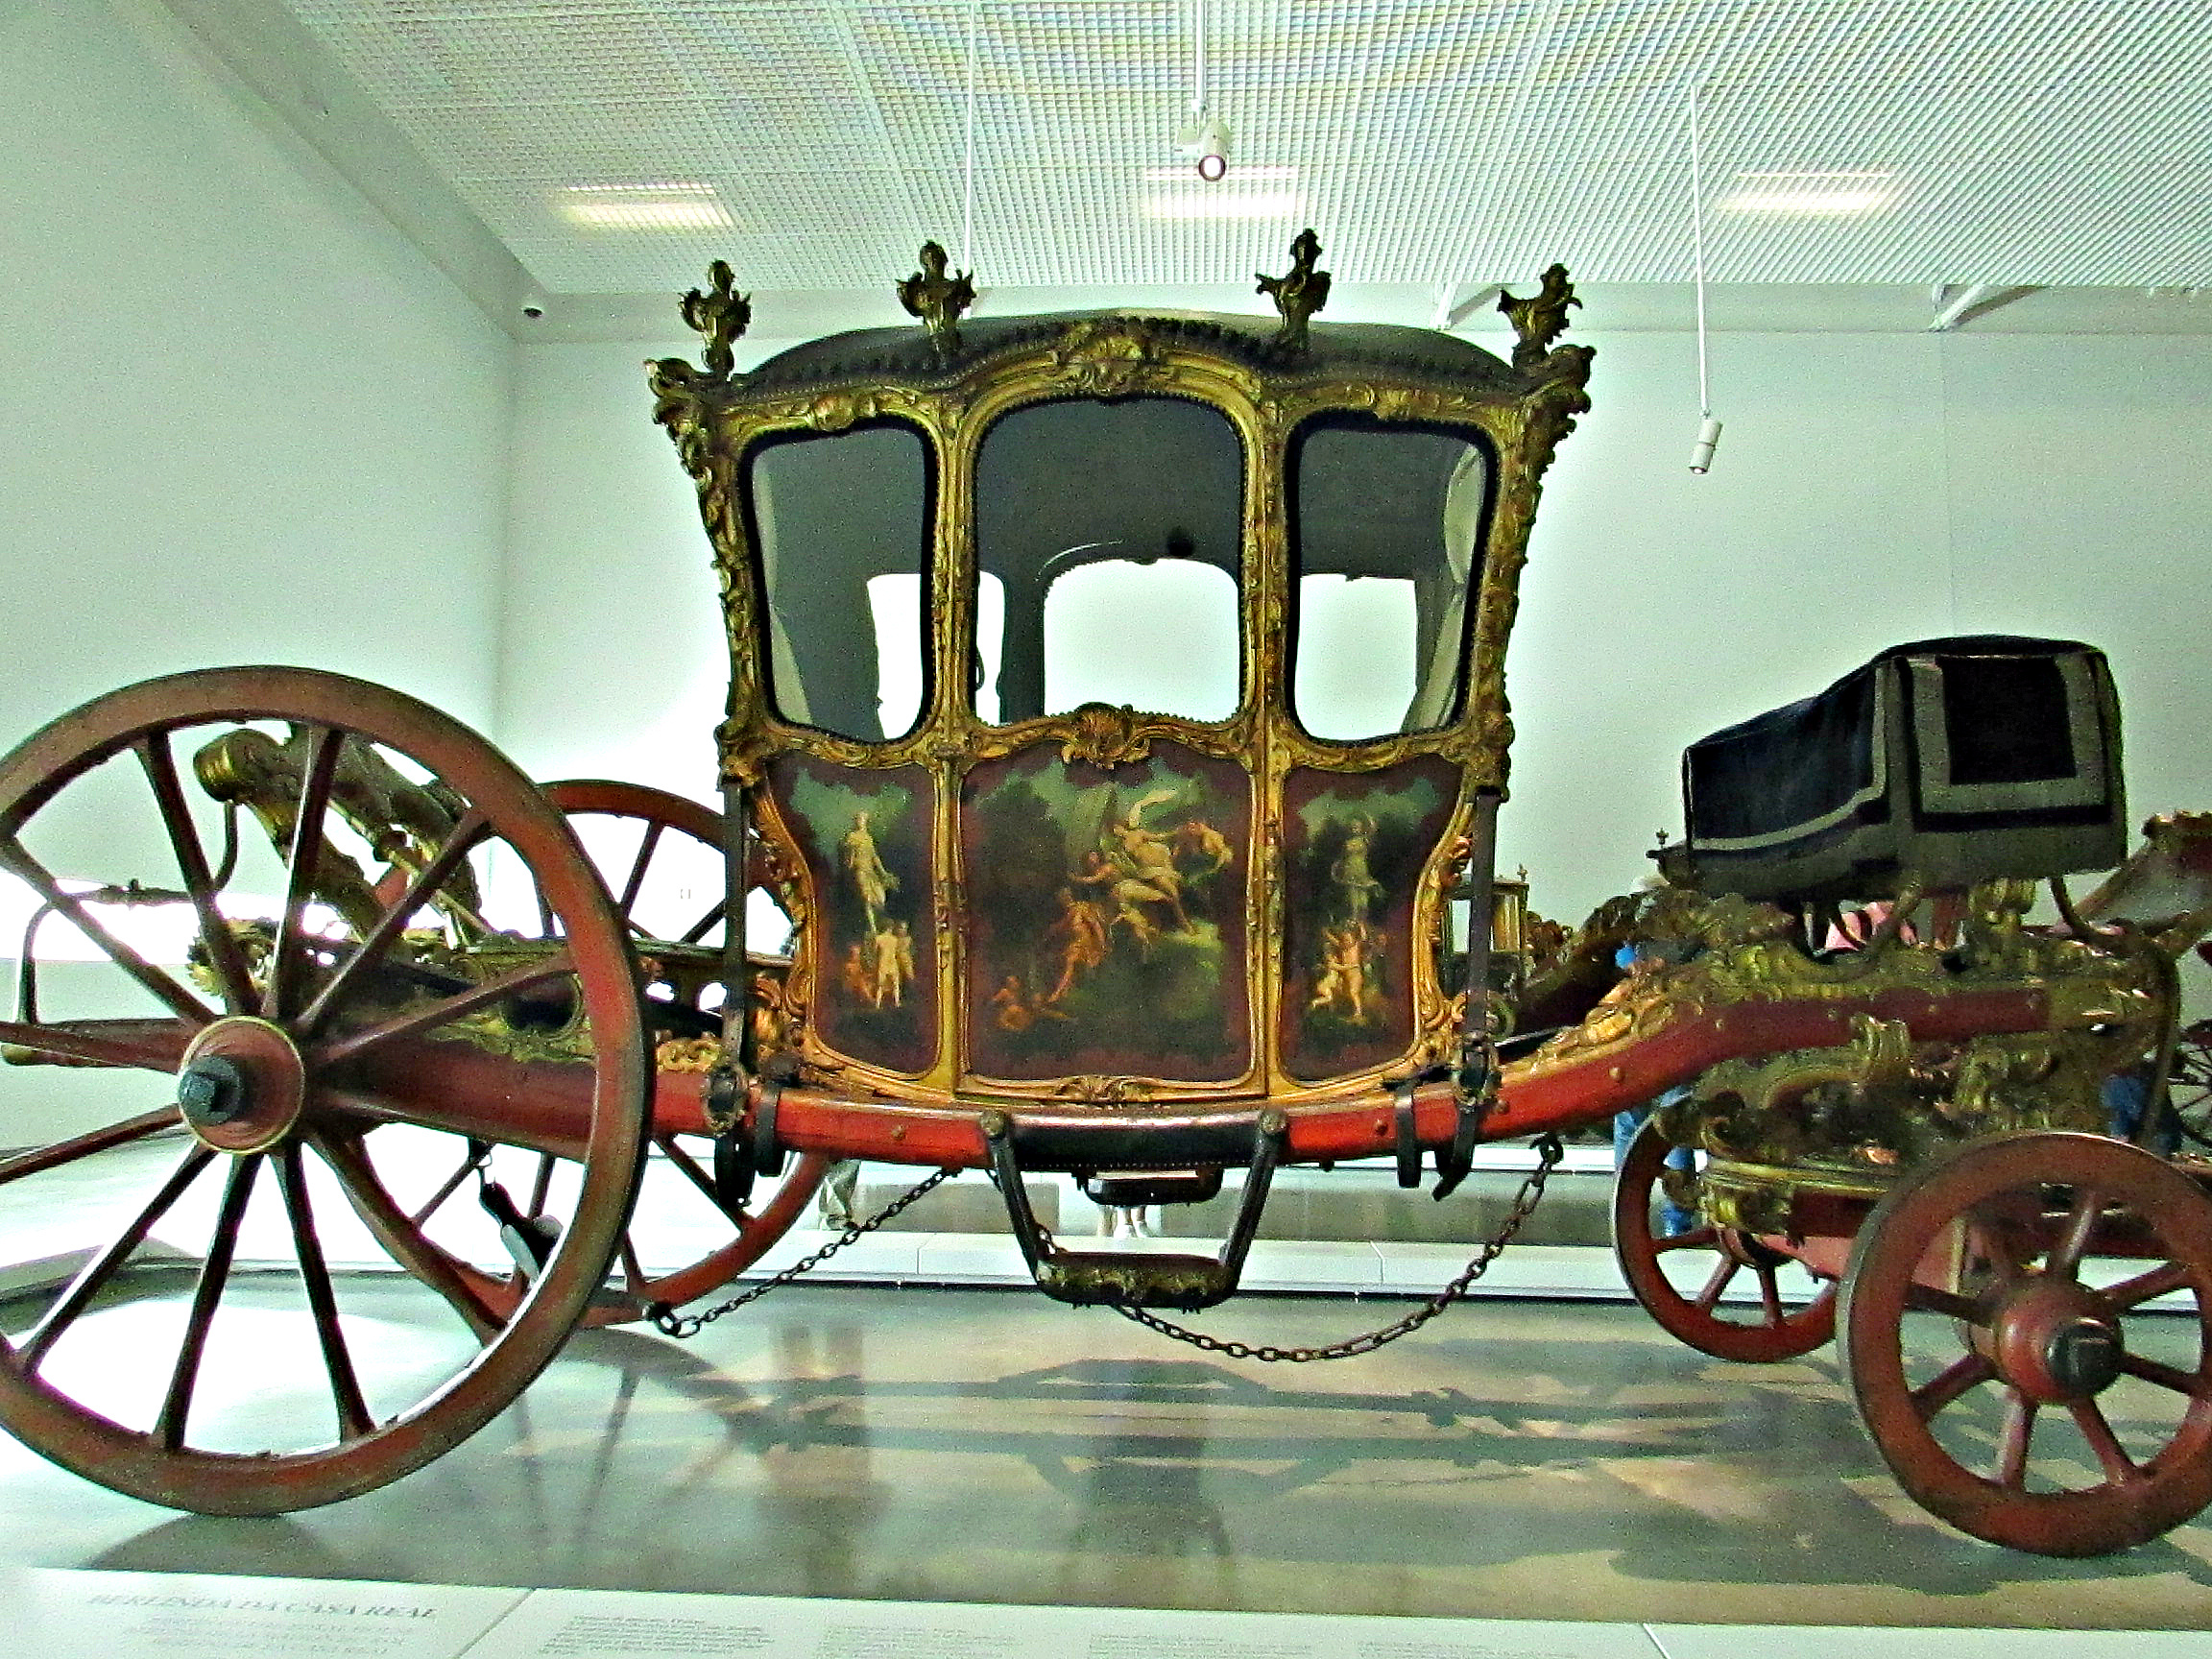 Тип кузова кареты где пассажиры сидят напротив. Дормез изнутри. Дормез карета. Музей карет в Лиссабоне. Фаэтон 19 века.